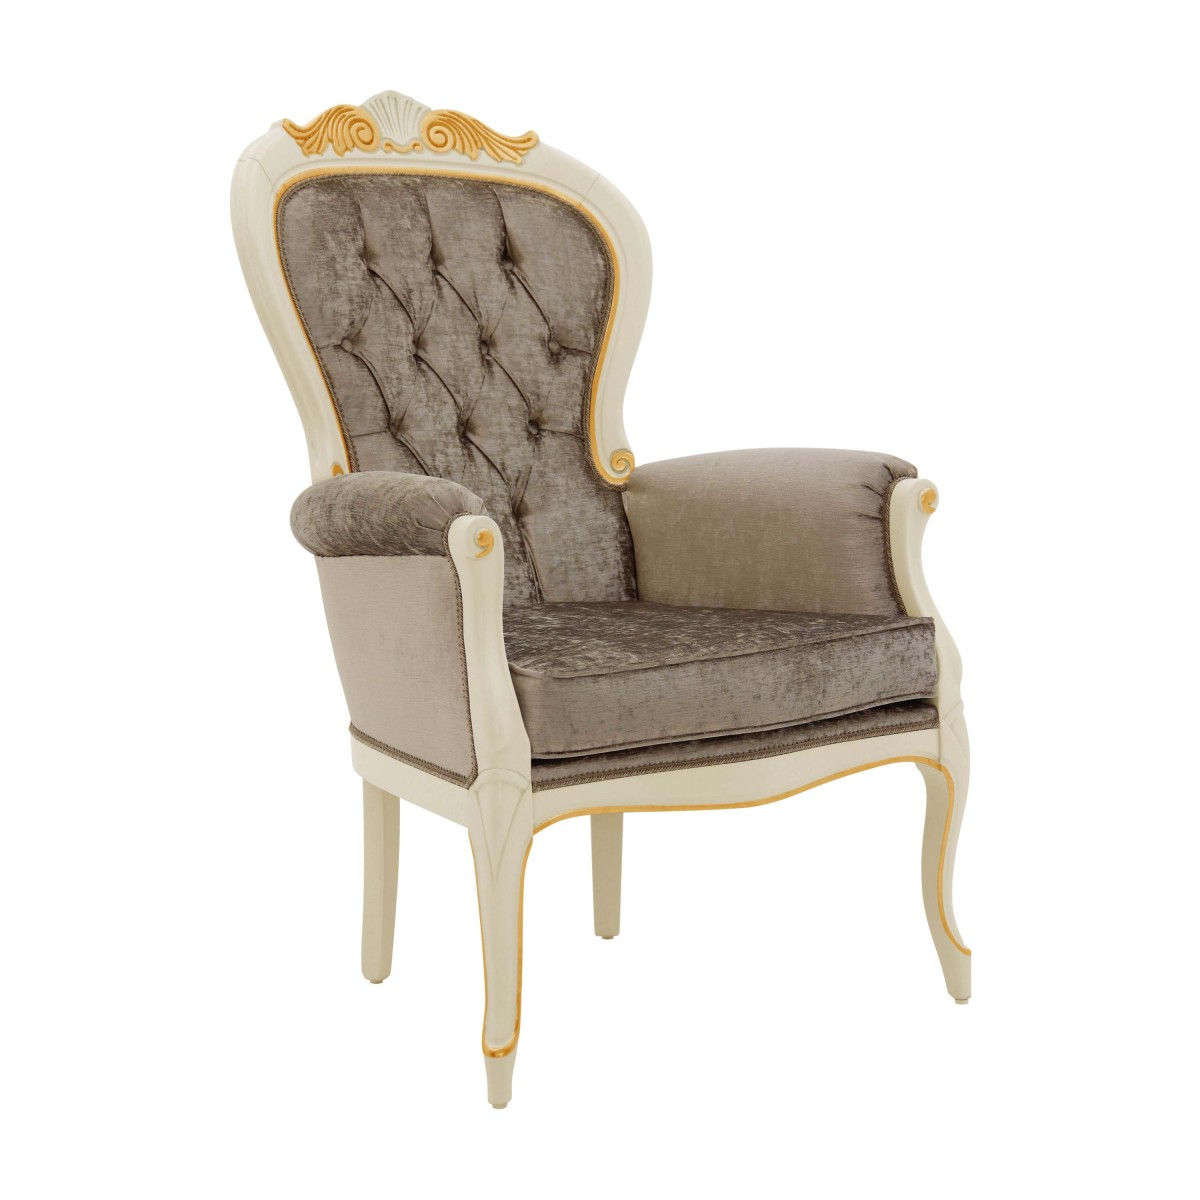 classic style wood armchair foglia 3264